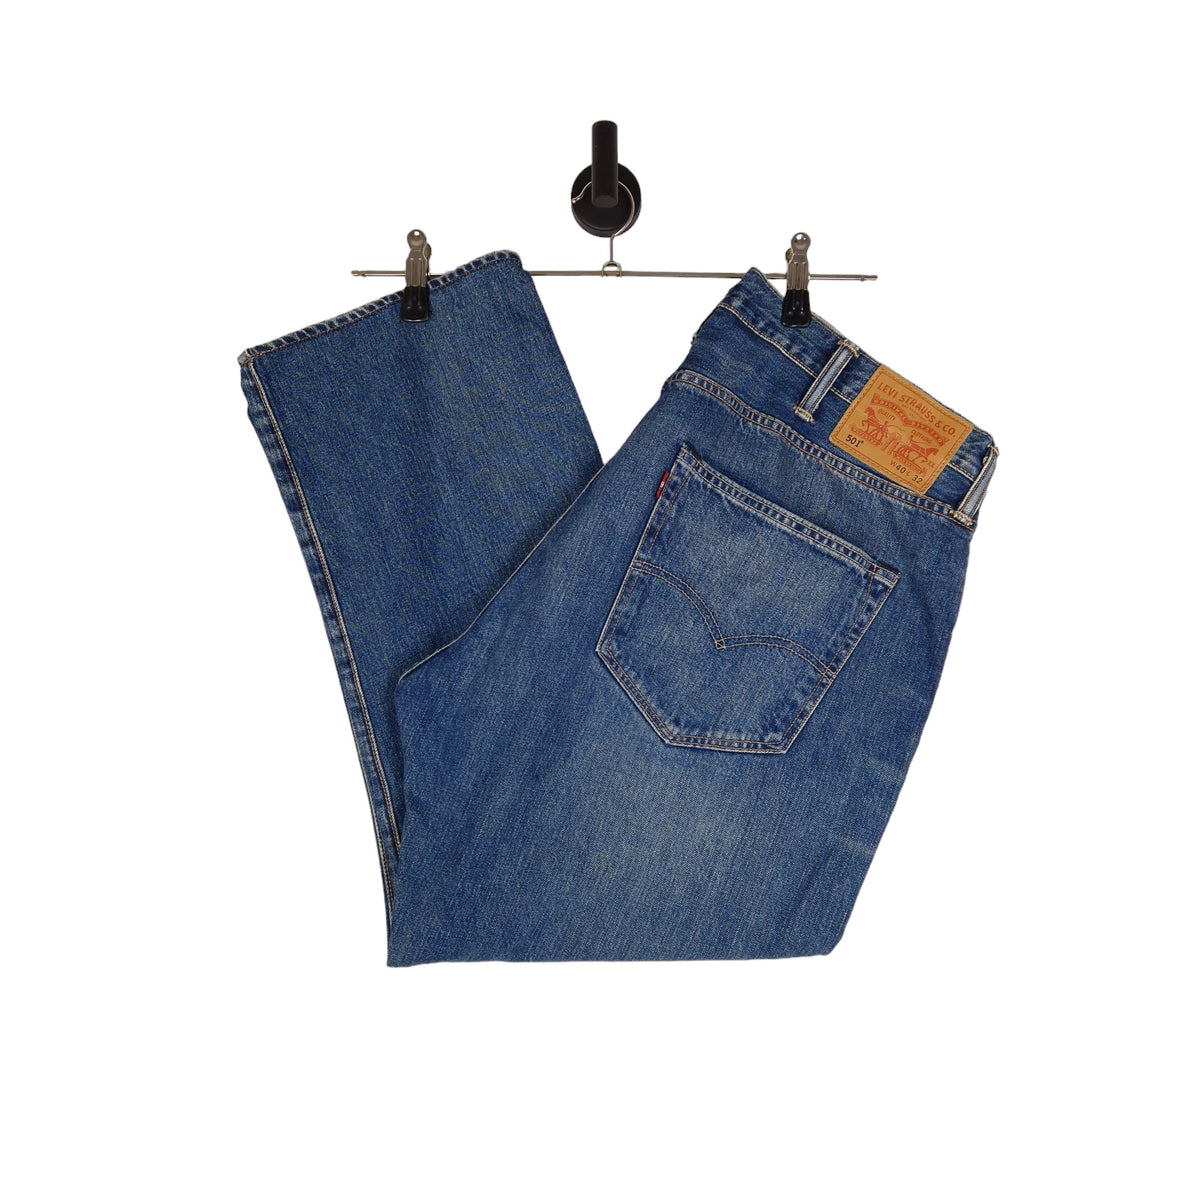 Levi's 501's Denim Jeans - Size W40 L32